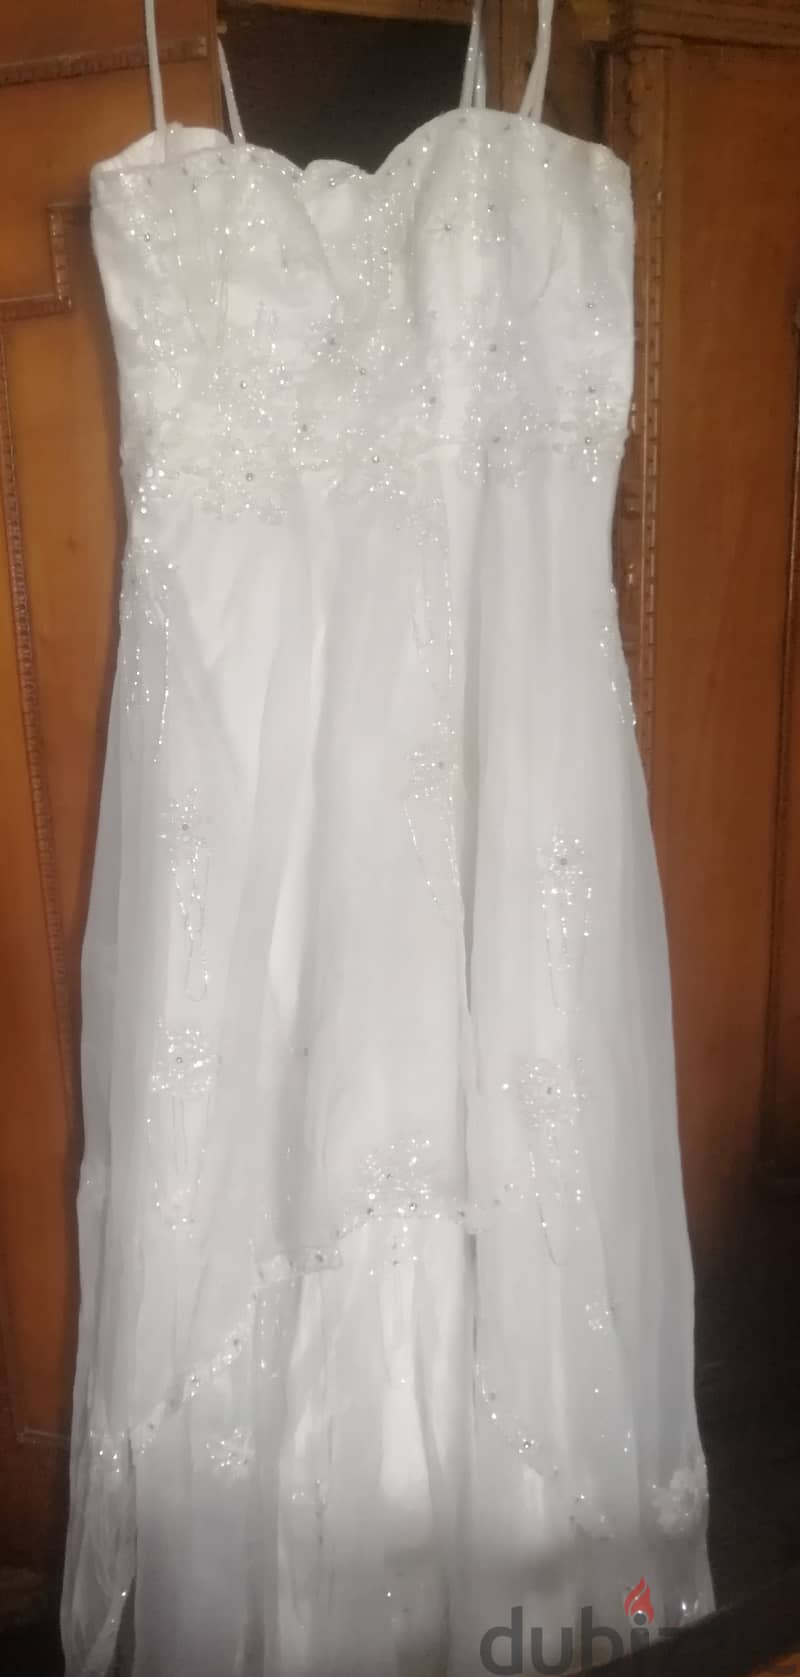 بيع فستان زفاف وسواريه 4